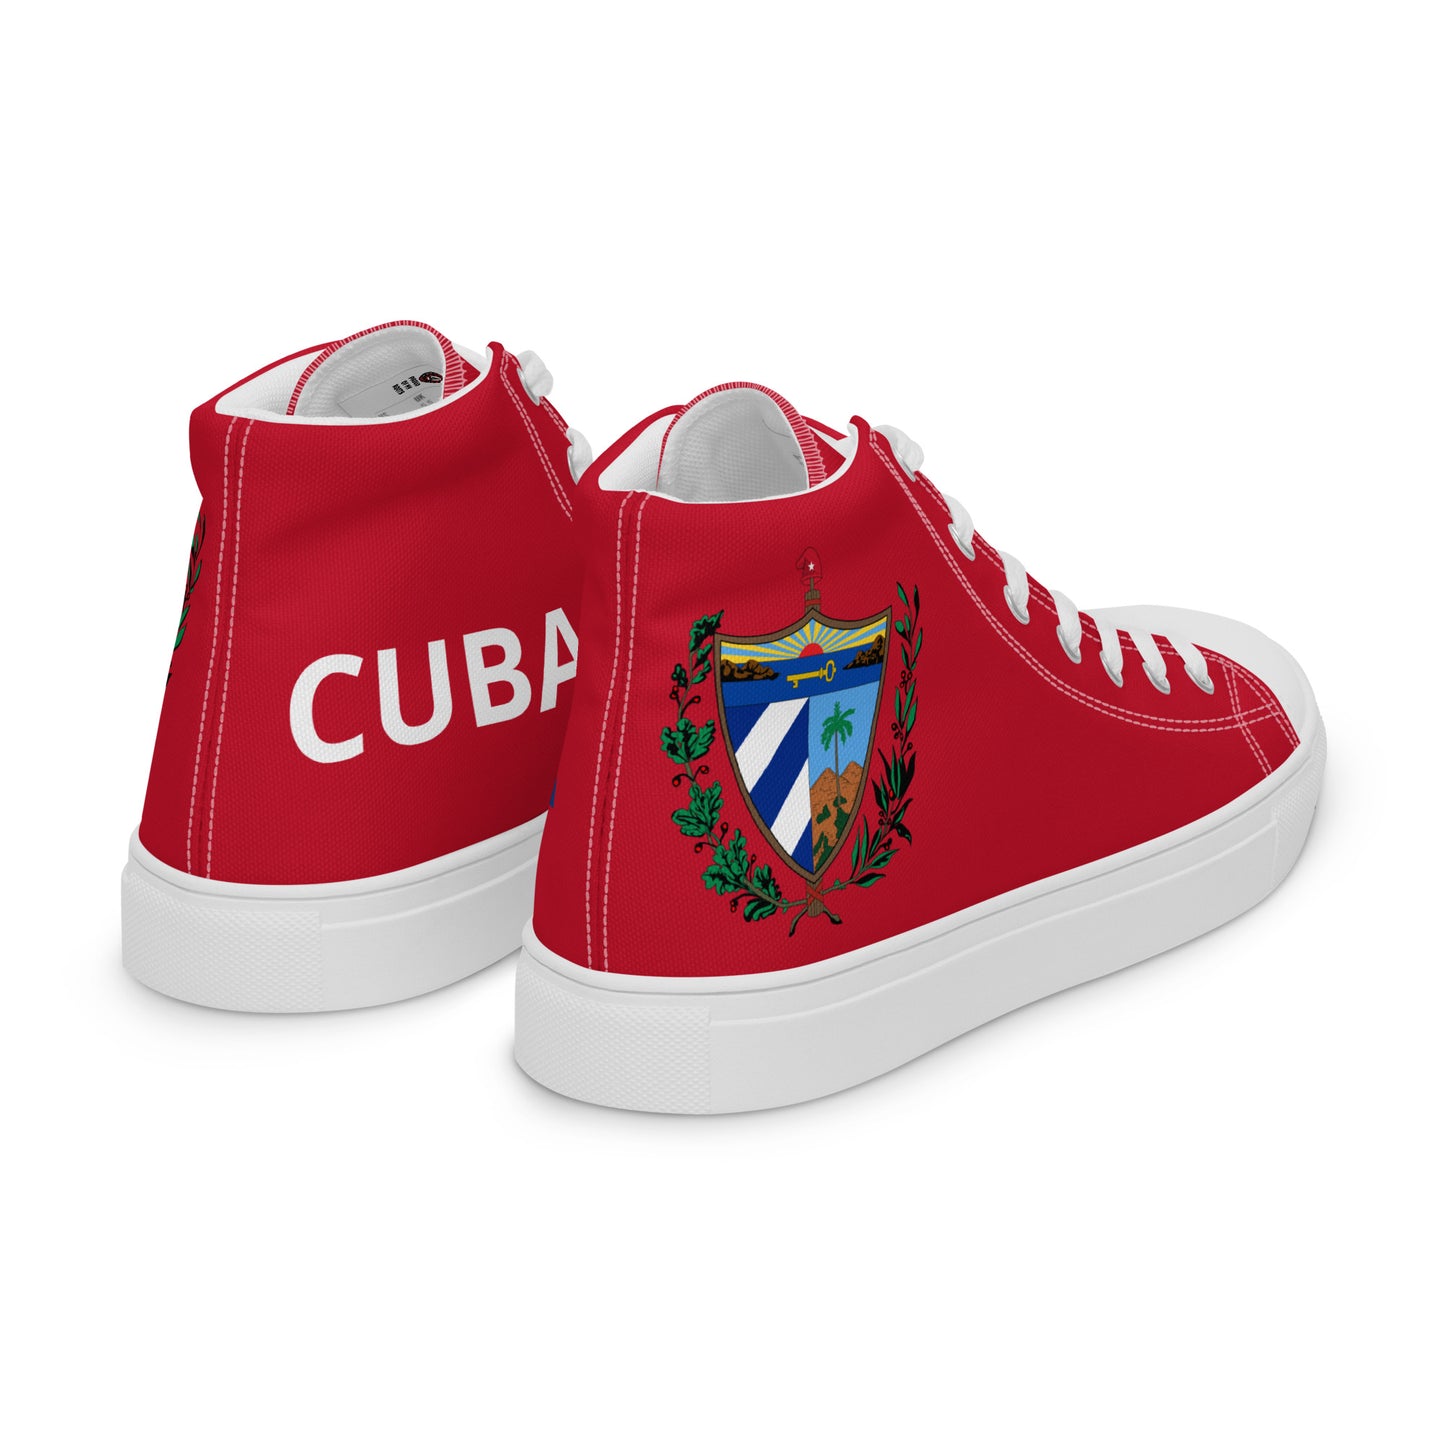 Cuba - Men - Red - High top shoes